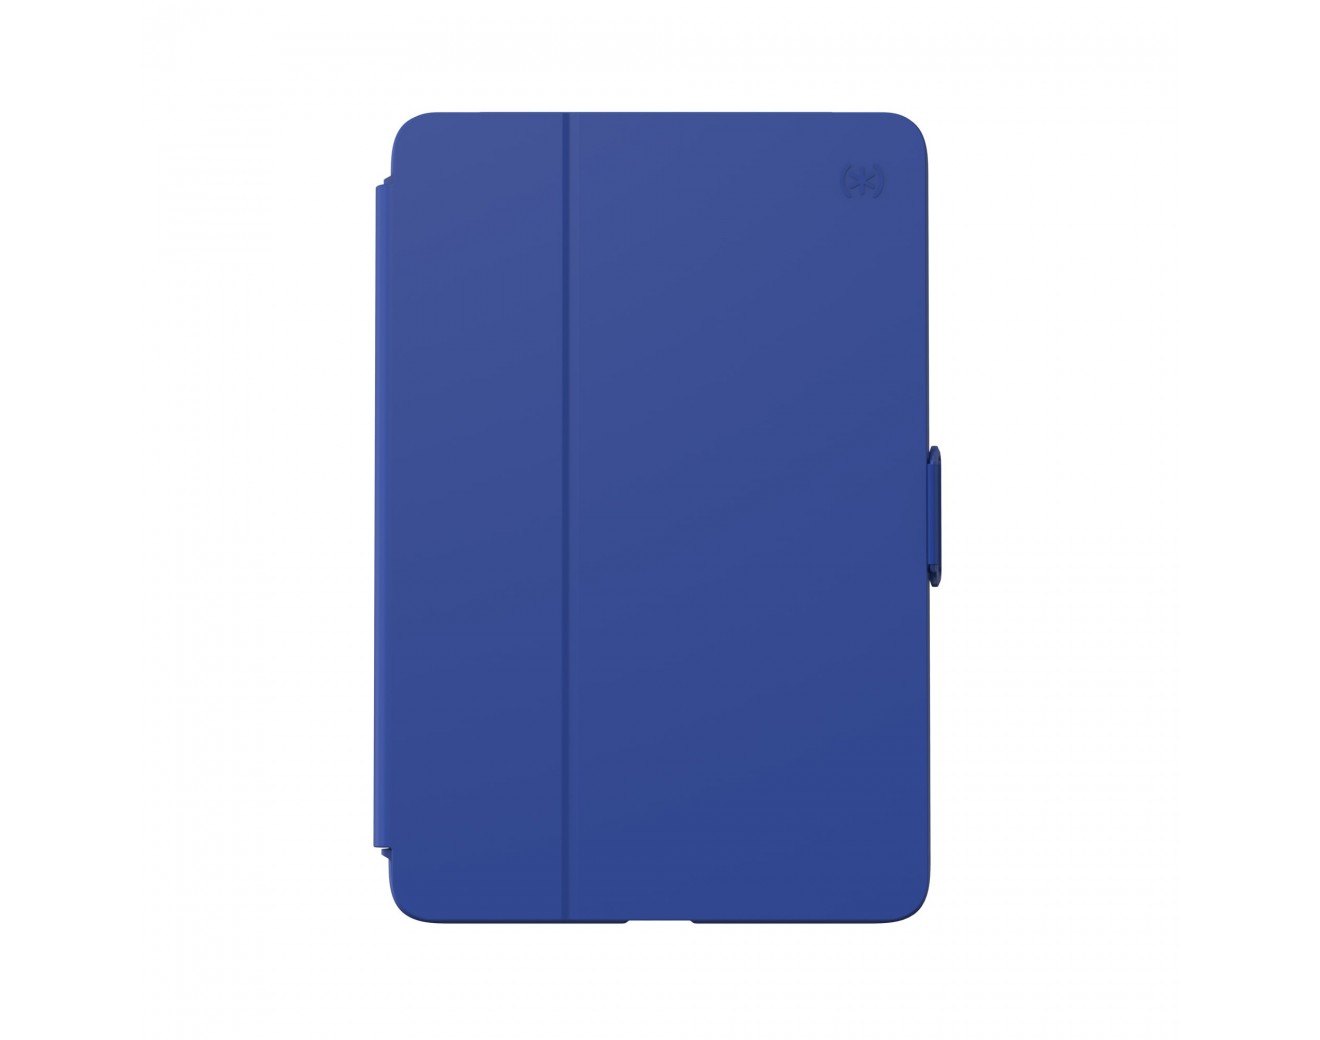 Калъф Speck Balance Folio iPad mini 2019 - Blueberry Blue/Ash